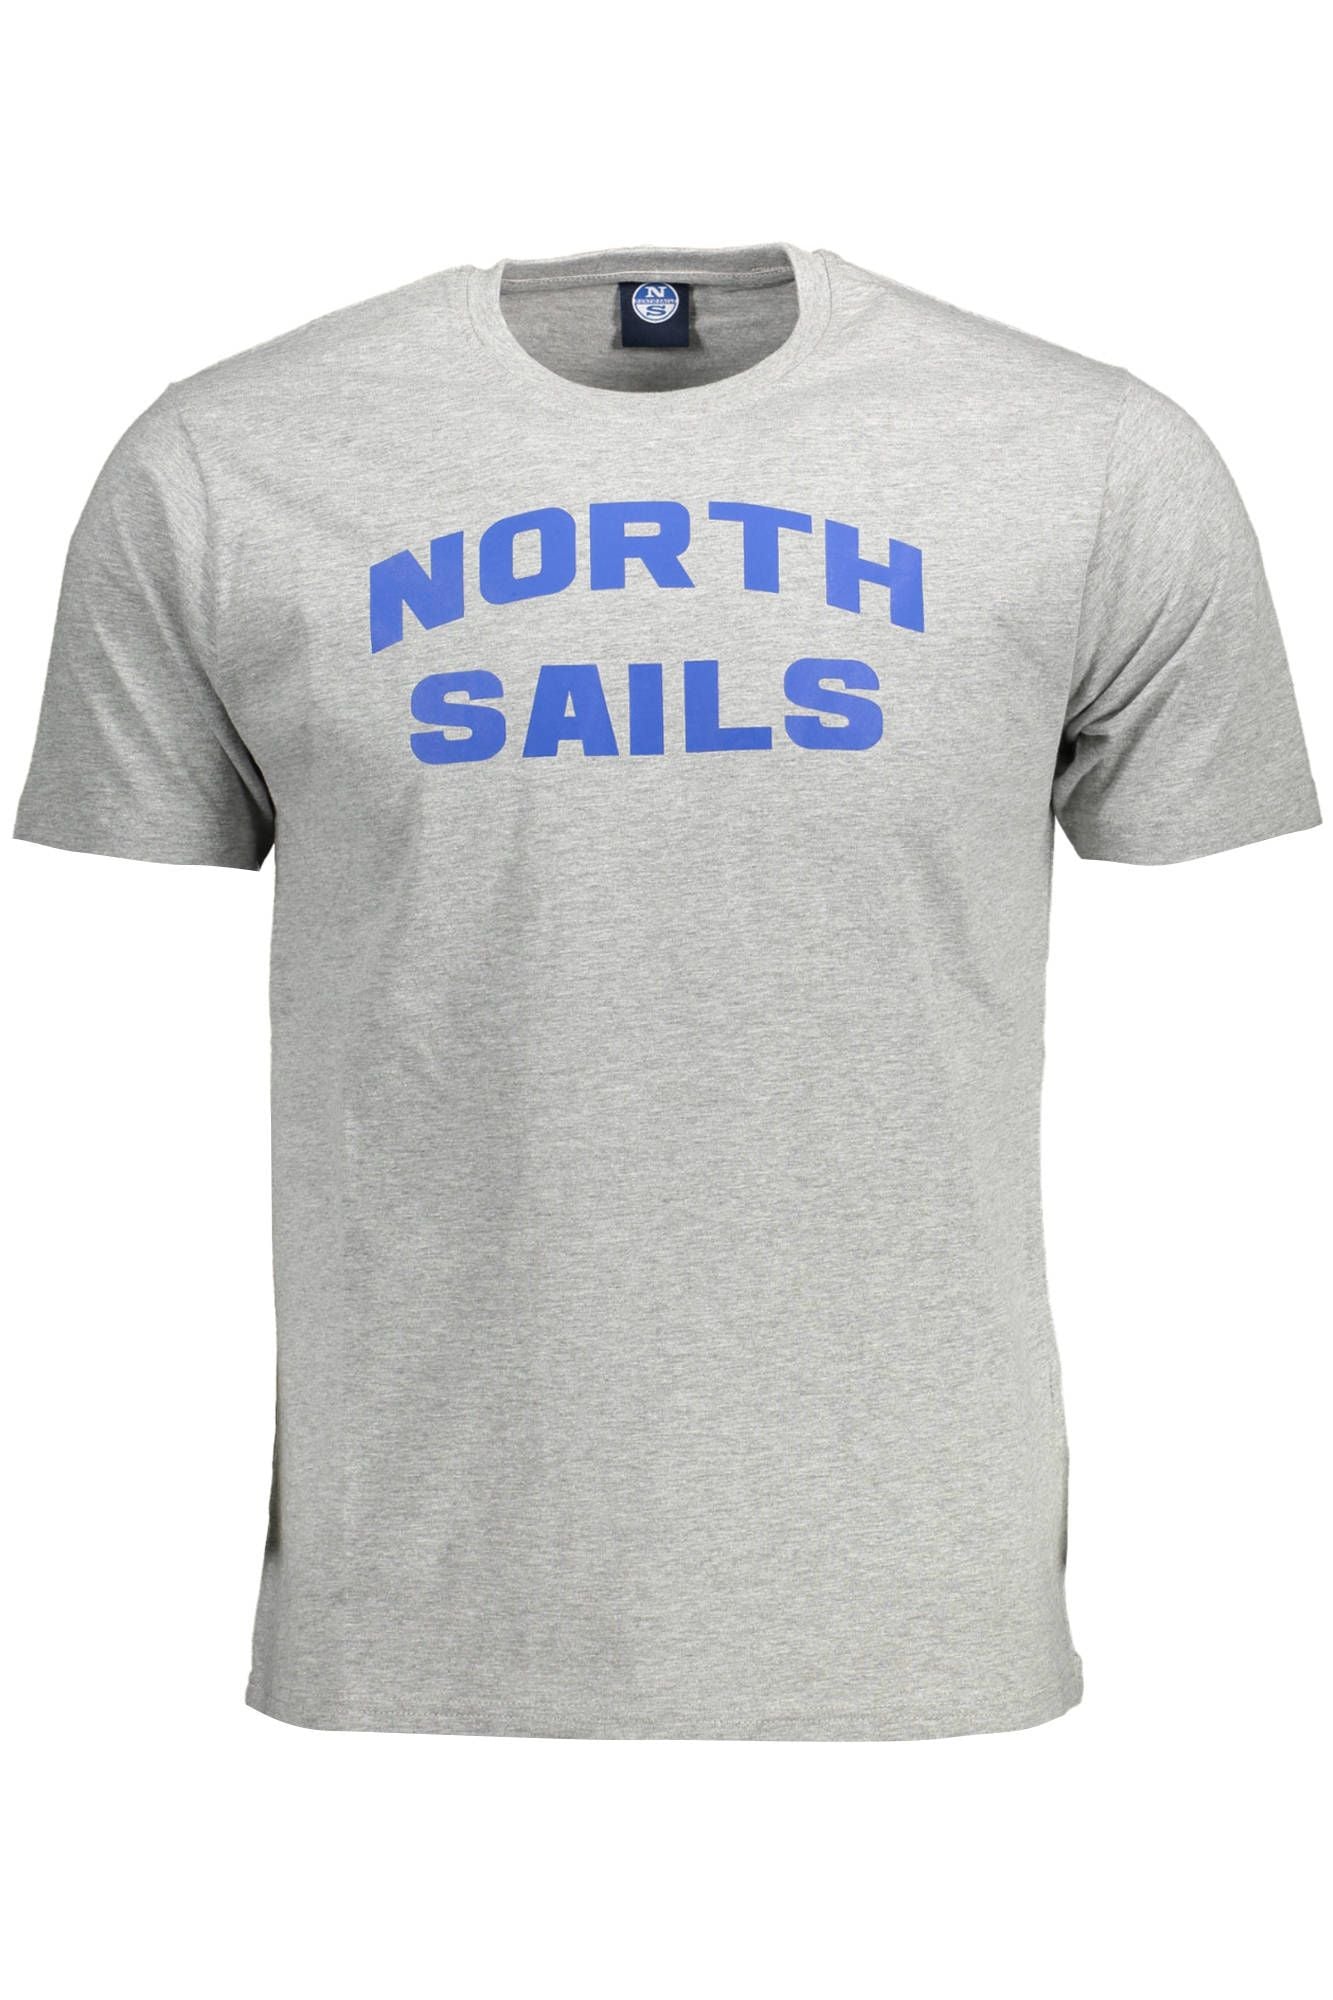 North Sails Chic Gray Crew Neck Statement Tee